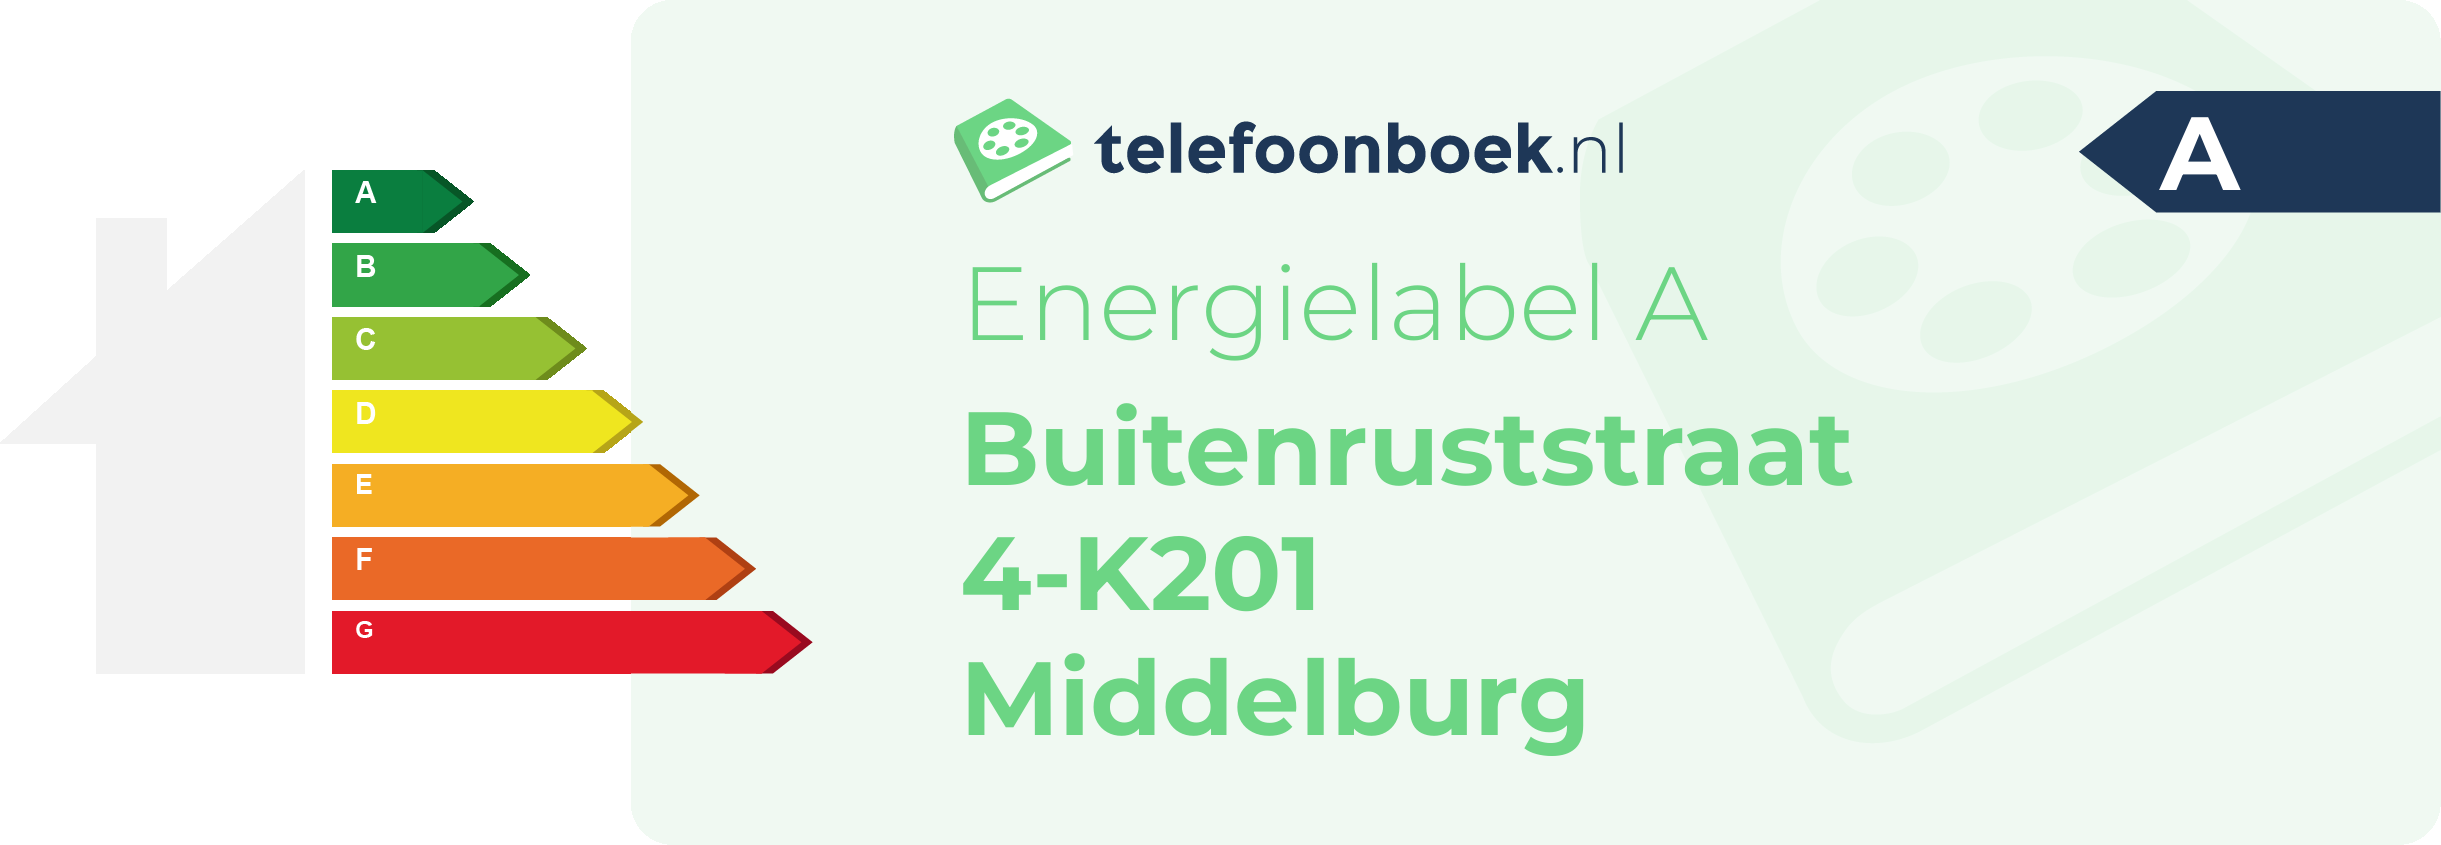 Energielabel Buitenruststraat 4-K201 Middelburg